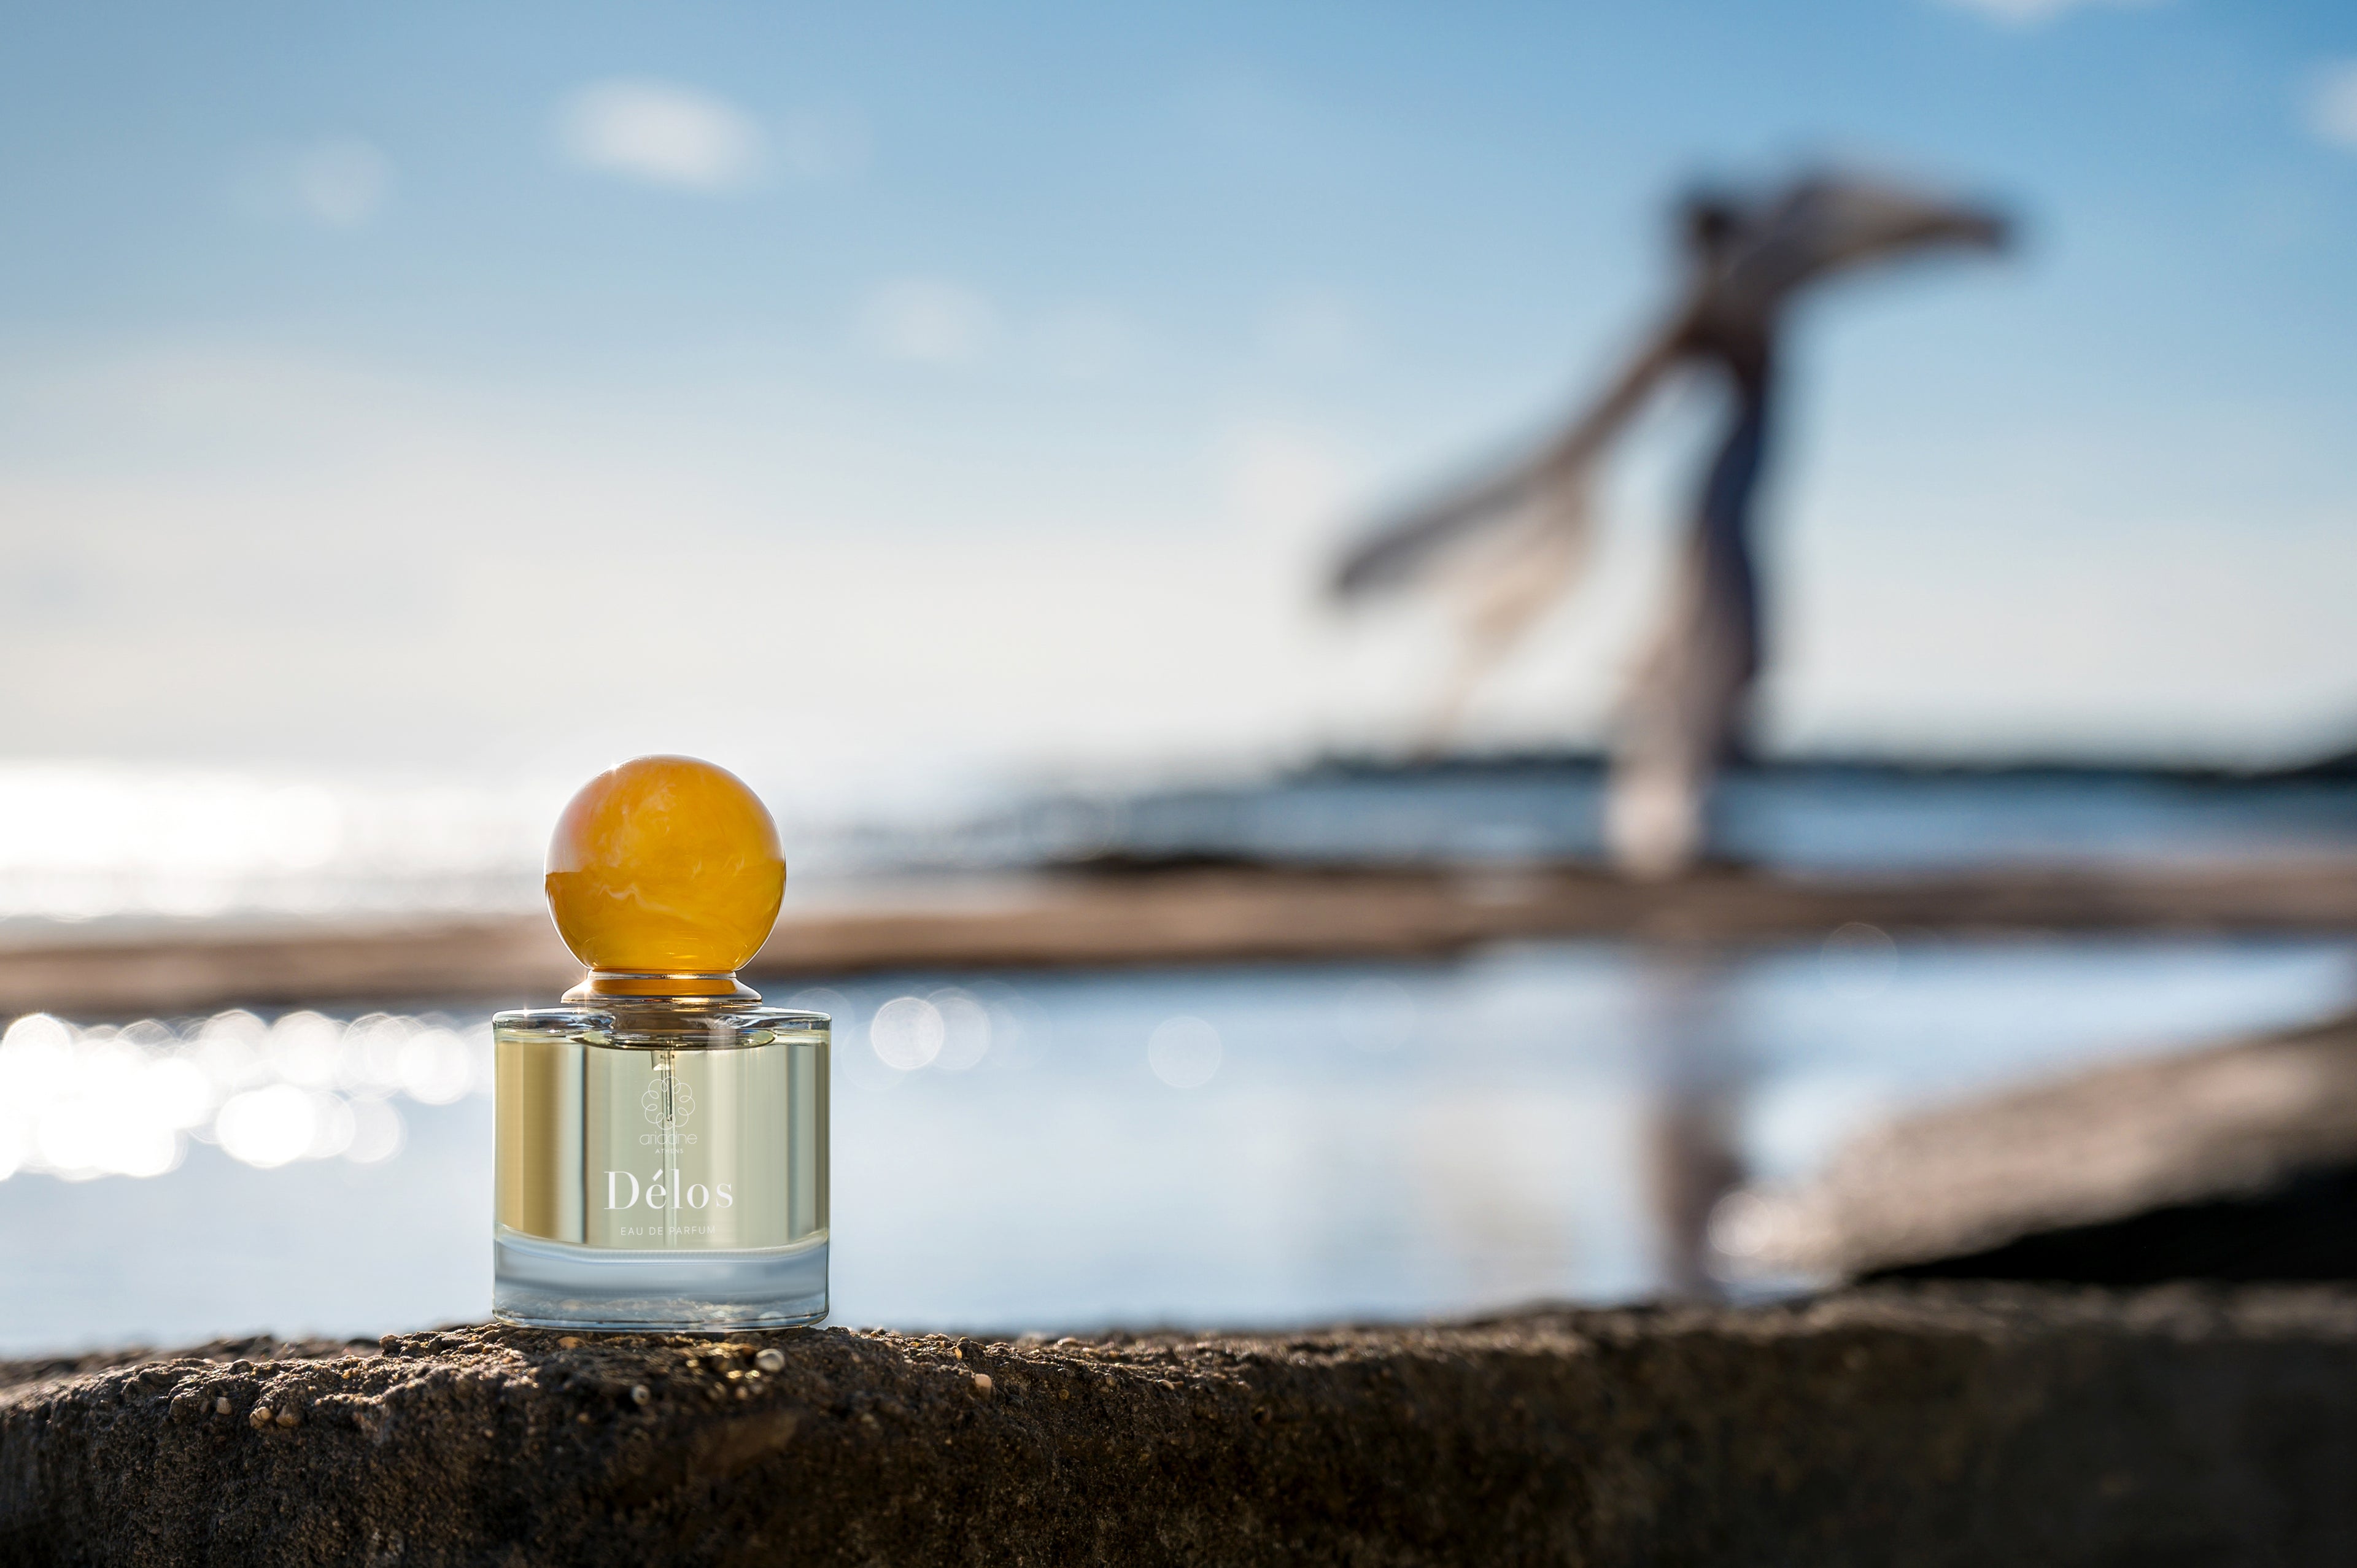 The Delos eau de parfume bottle near the sea.